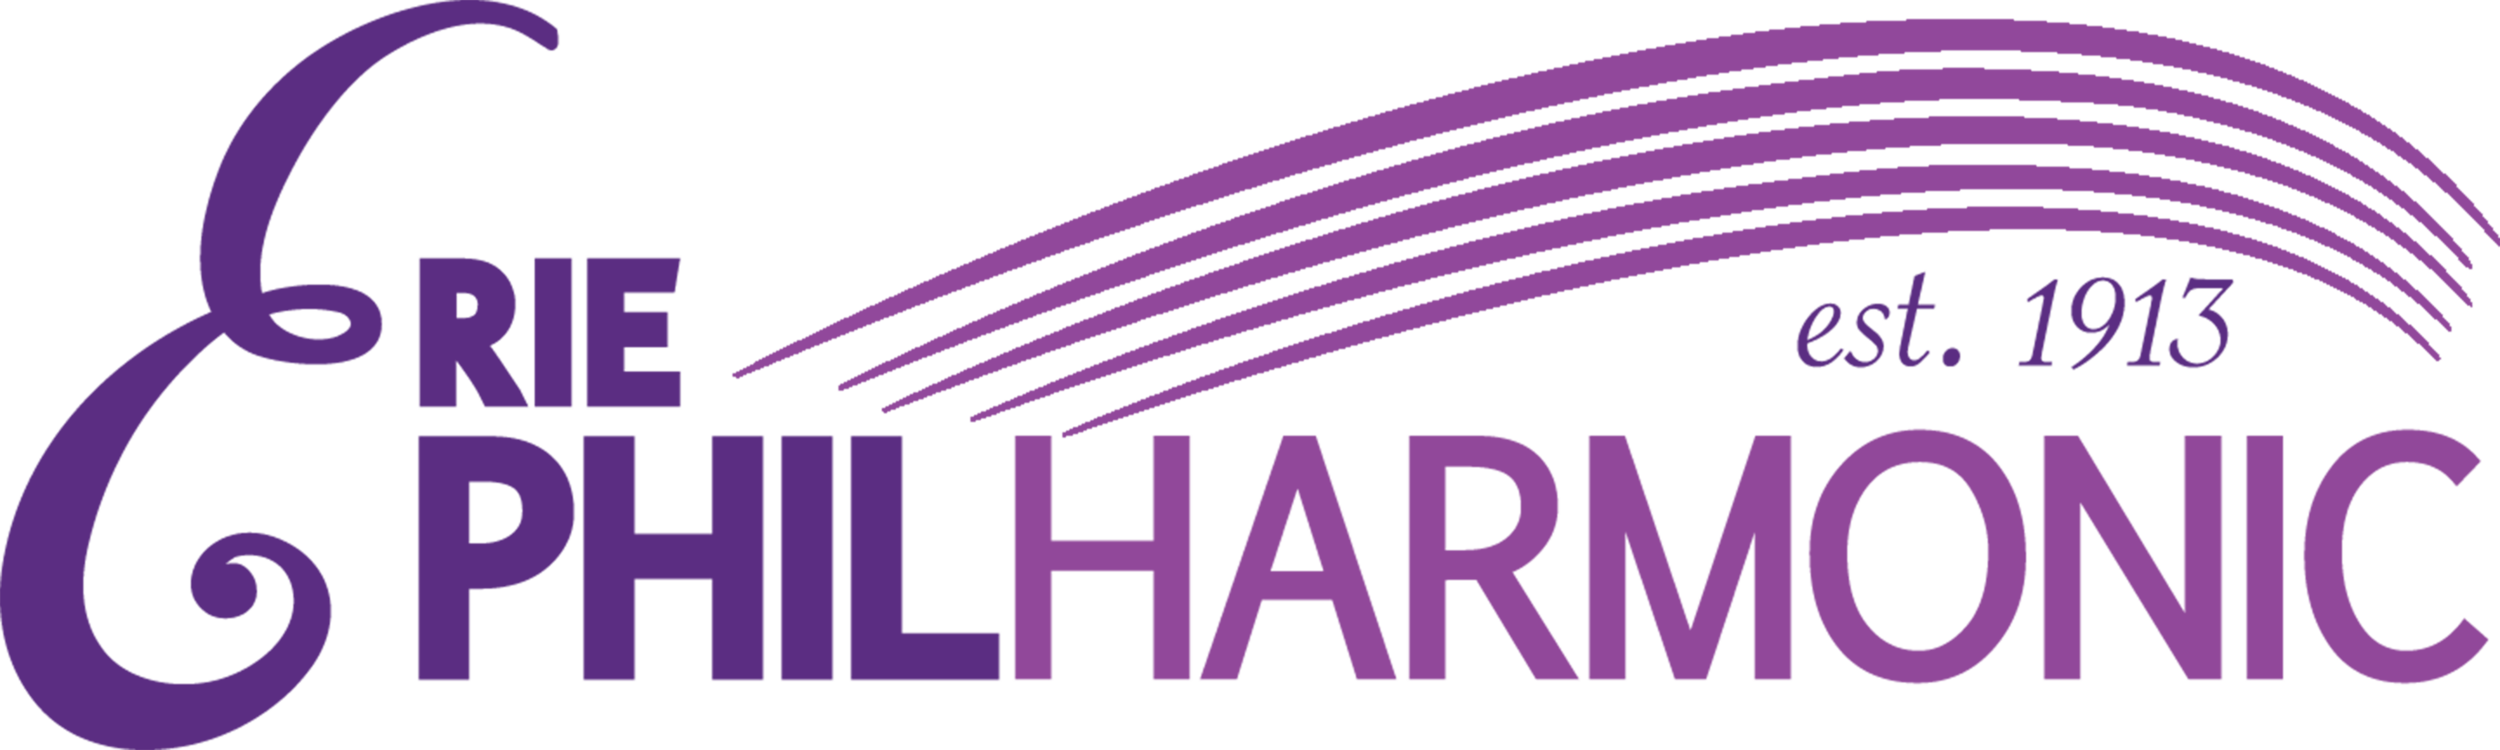 Erie Philharmonic Logo